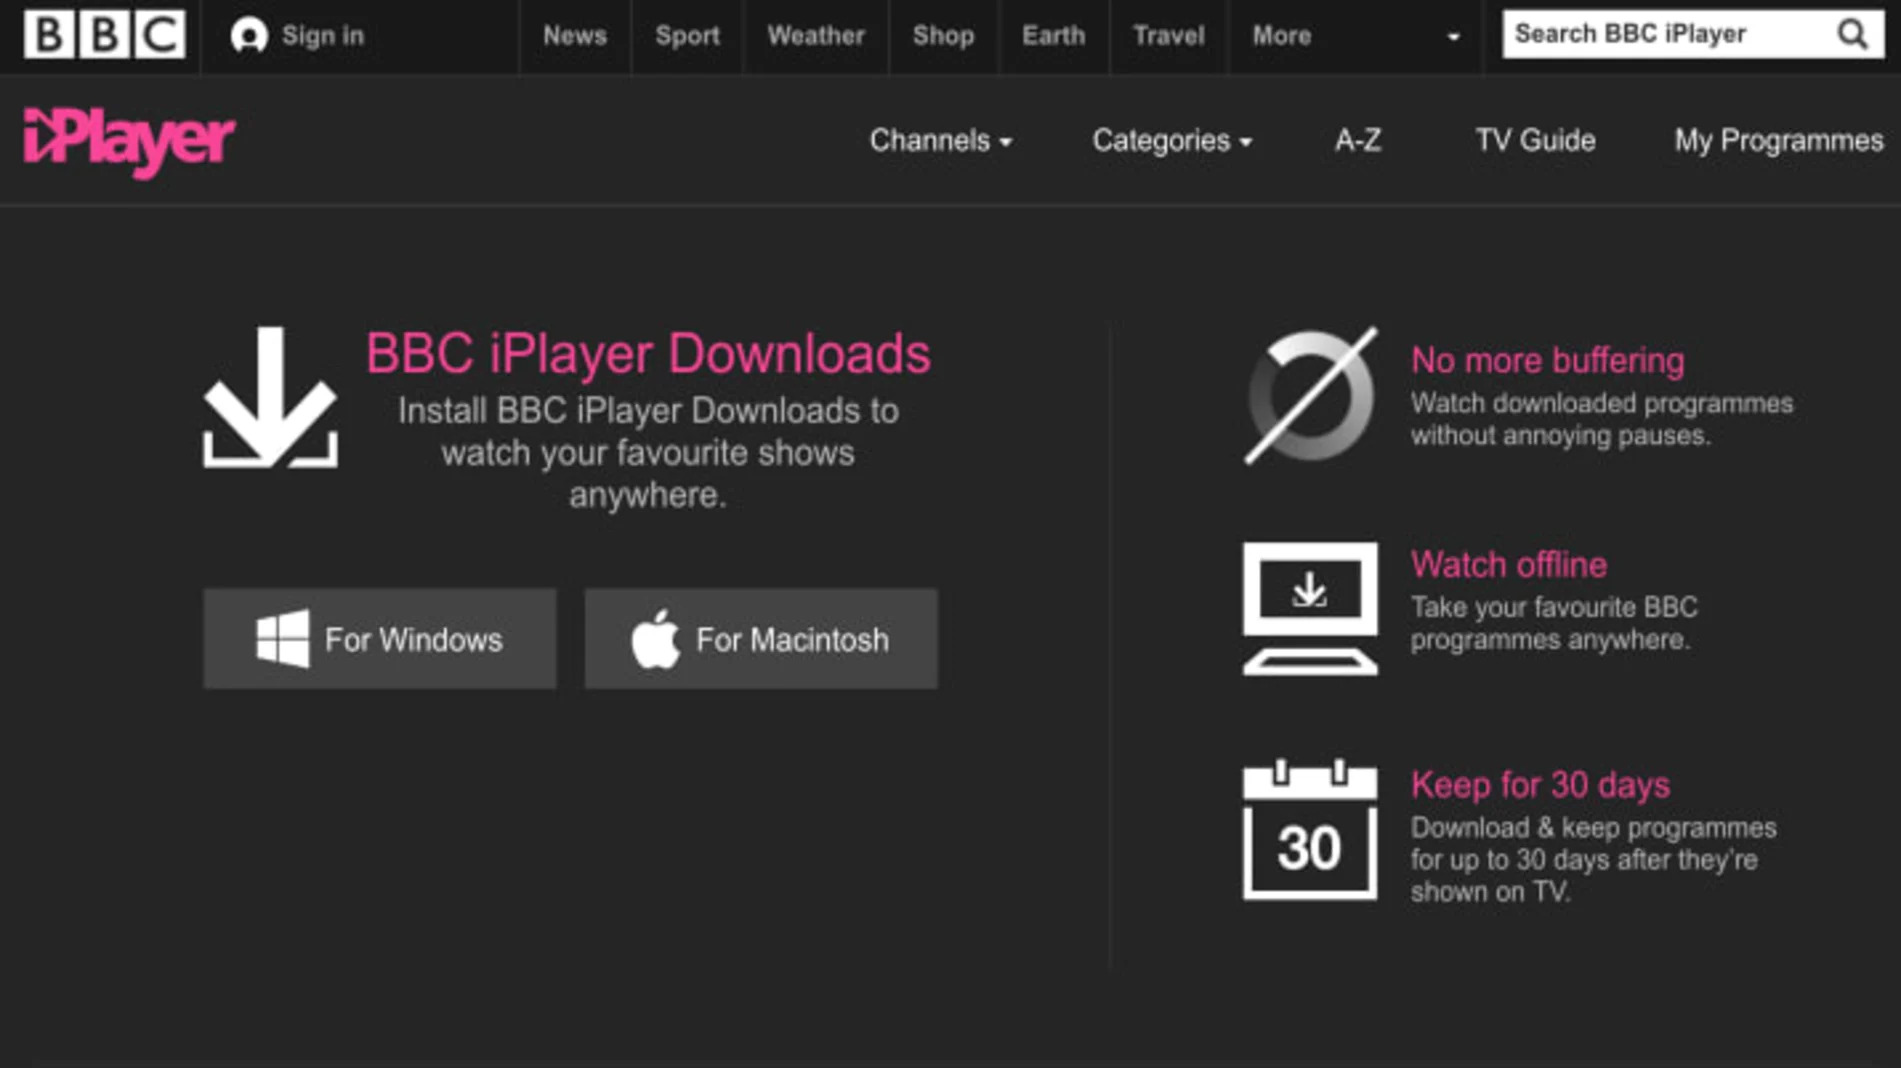 BBC iPlayer Downloads App